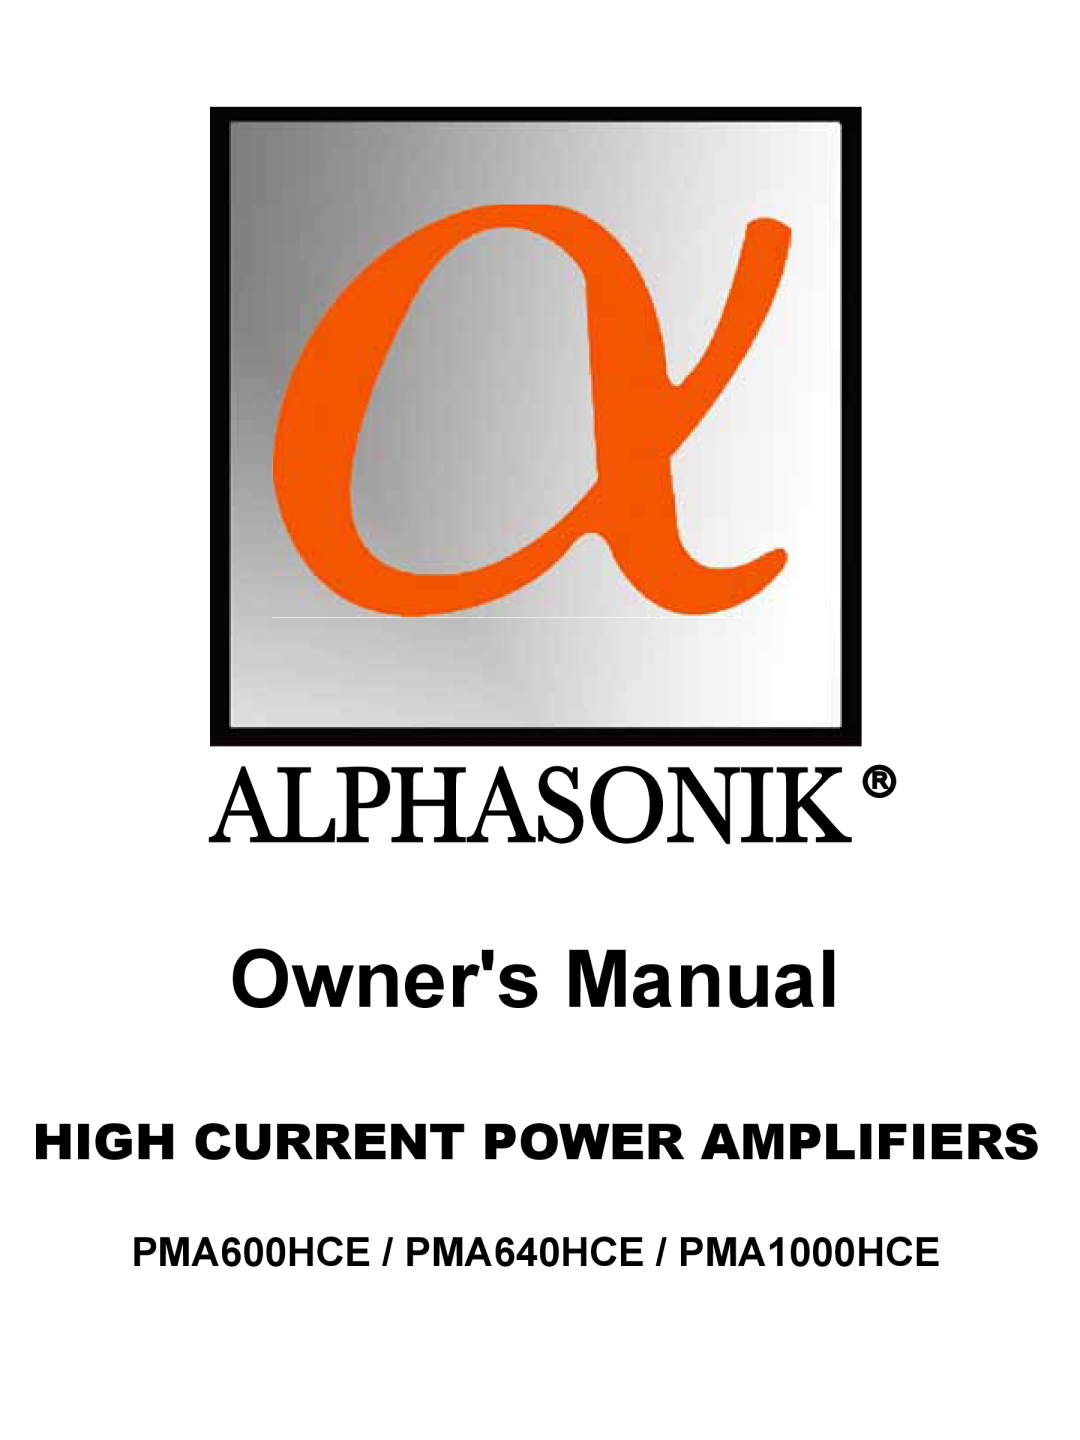 Alphasonik owner manual Alphasonik R, High Current Power Amplifiers, PMA600HCE / PMA640HCE / PMA1000HCE 